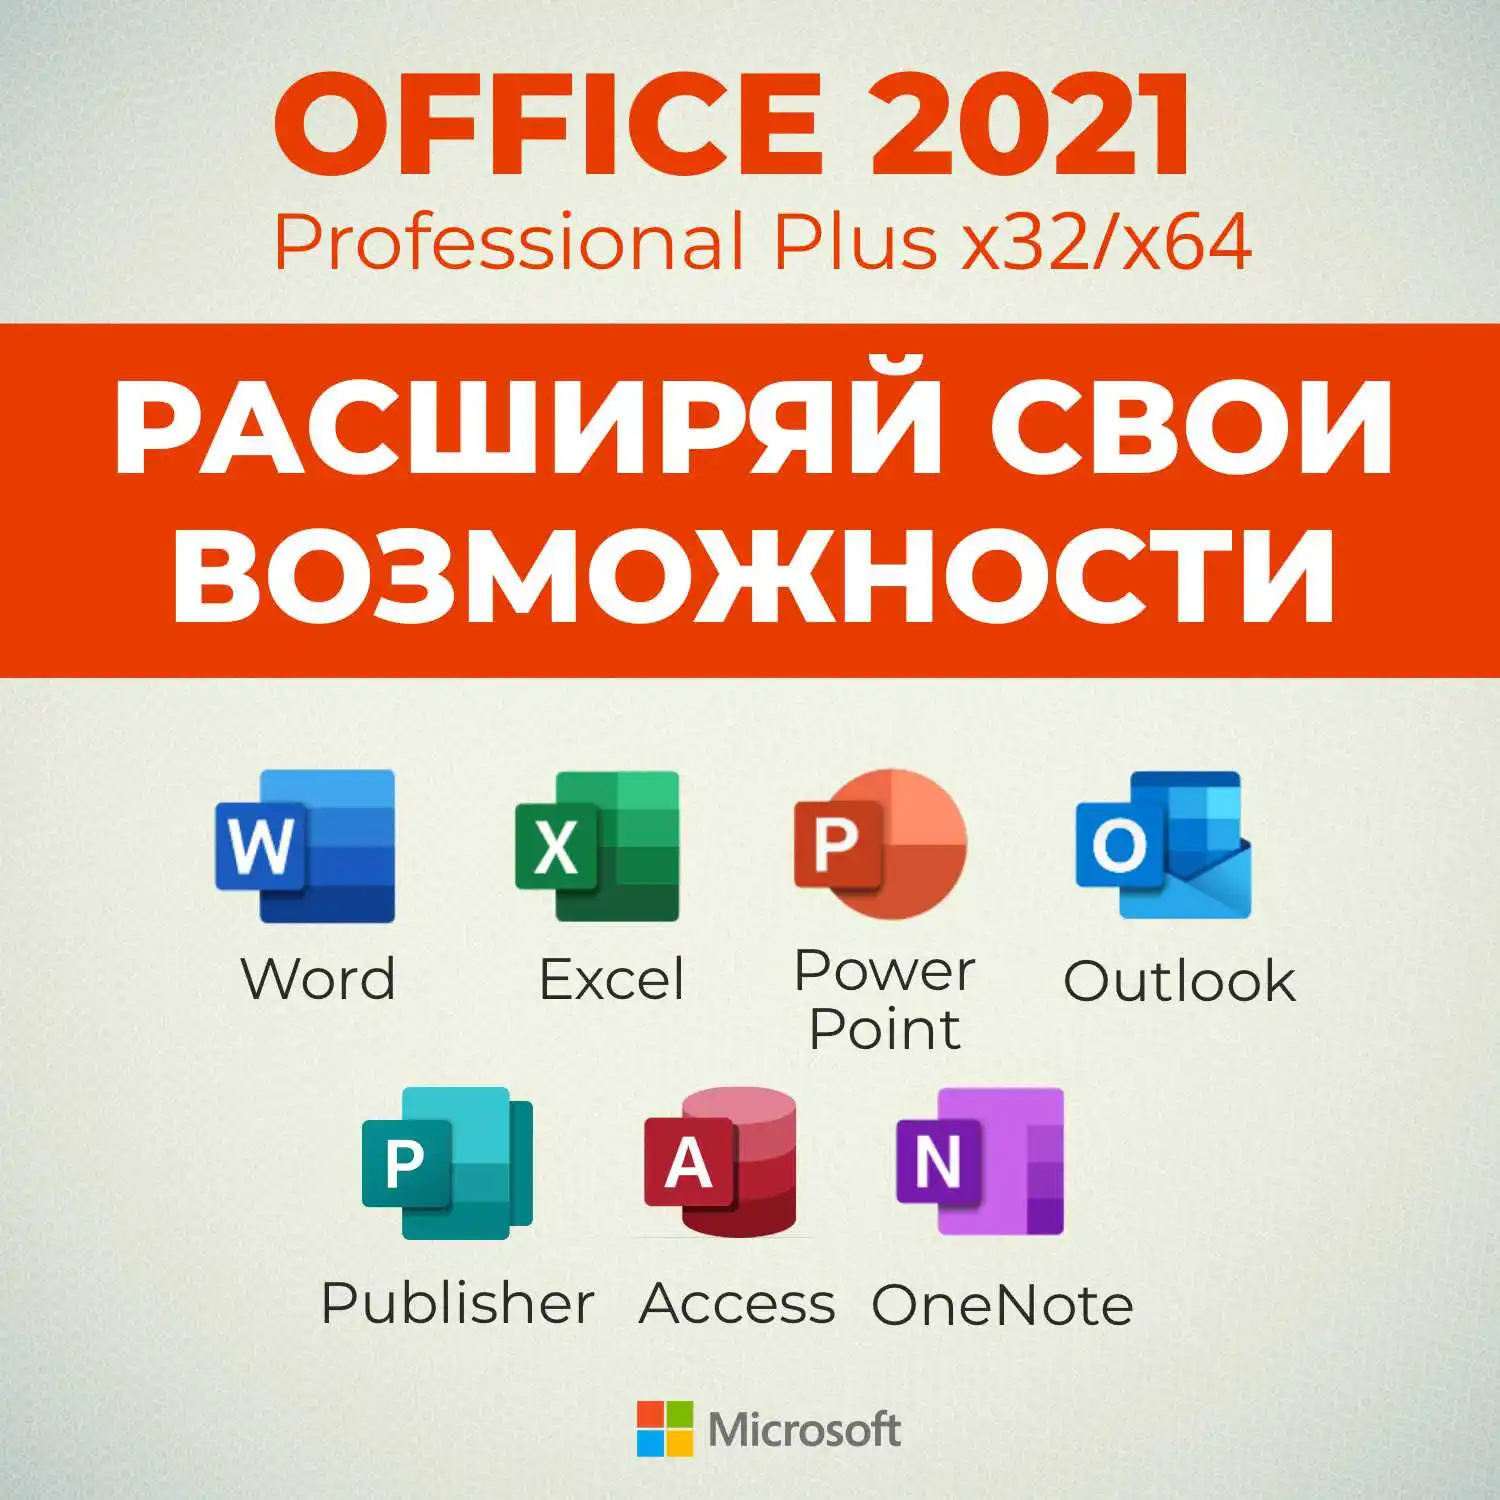 Ключ активации Office 2021. Microsoft Office 2021 ключ. Ключ для MS Office Pro 2021. Ключ активации офис 2021 профессионал плюс. Активировать офис 2021 ключ